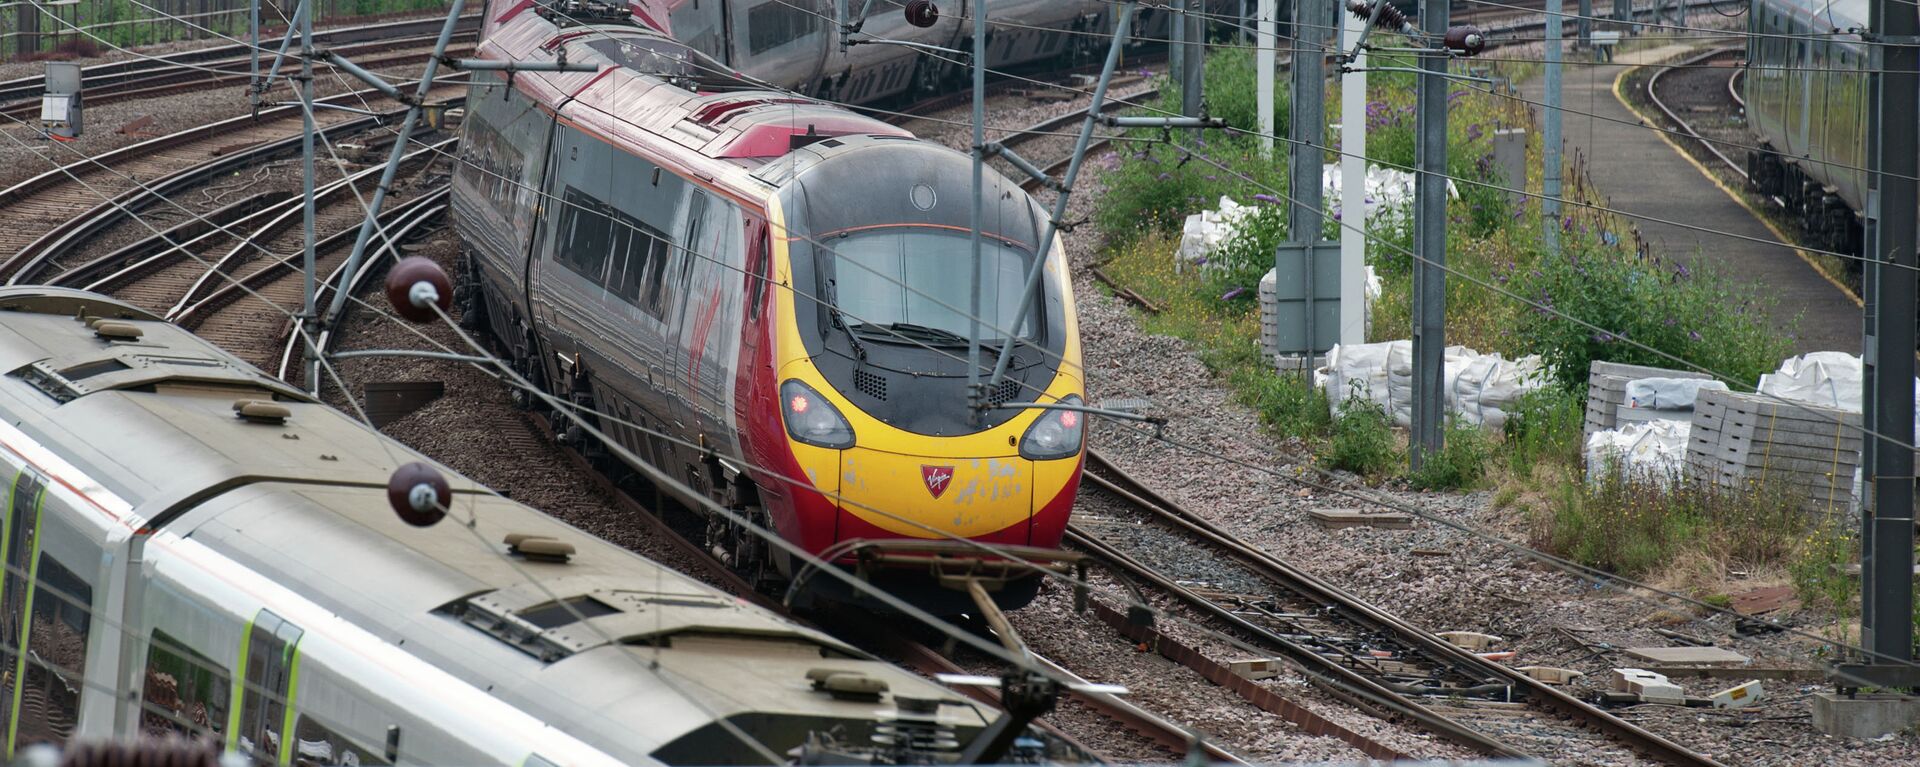 A Virgin train arrives at Euston station in London, on August 15, 2012 - Sputnik International, 1920, 20.06.2022